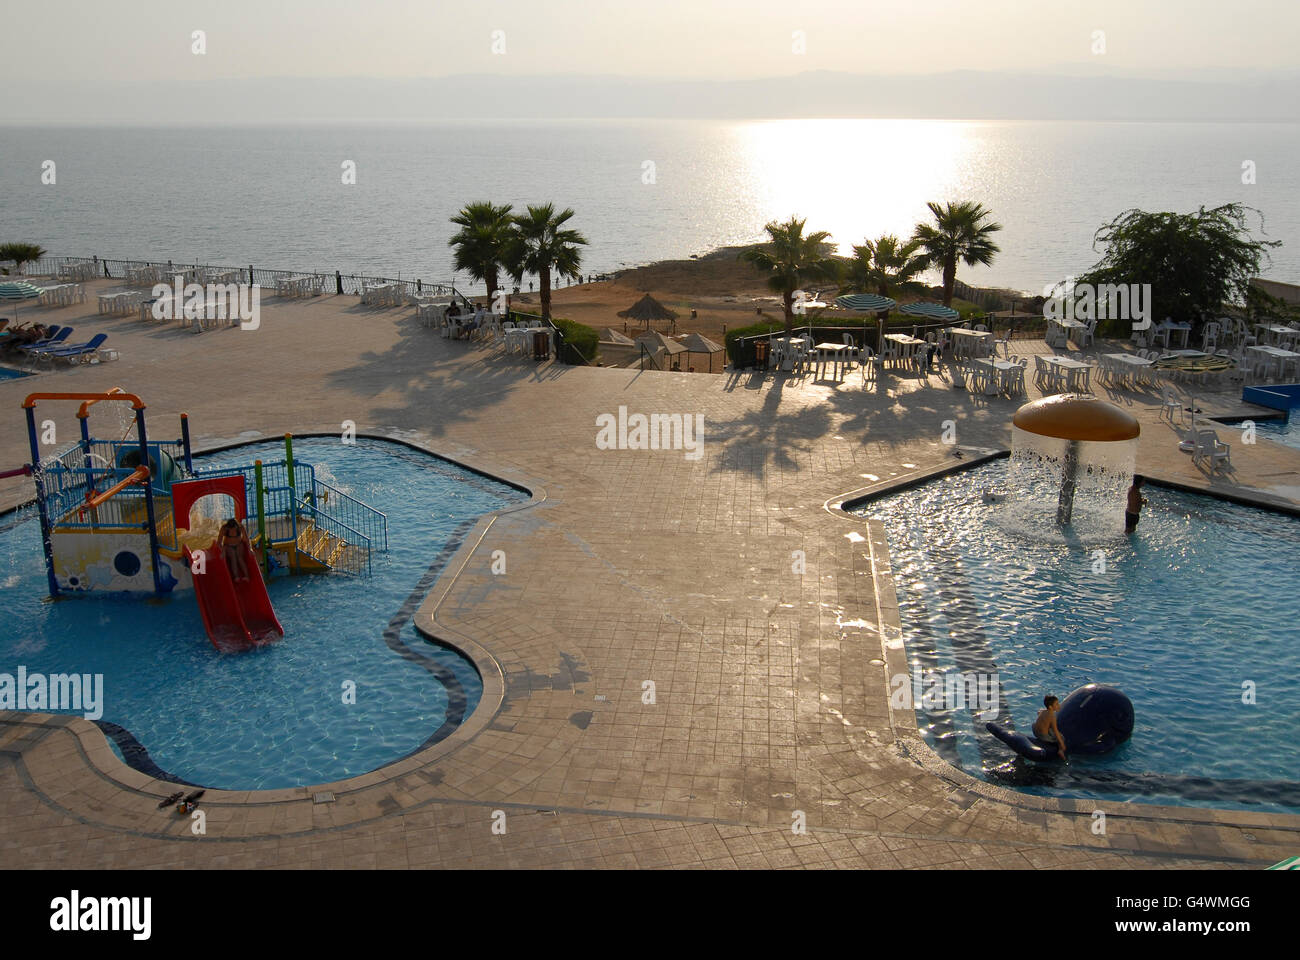 JORDAN , Dead Sea Spa Hotel at dead sea , beach resort with ...